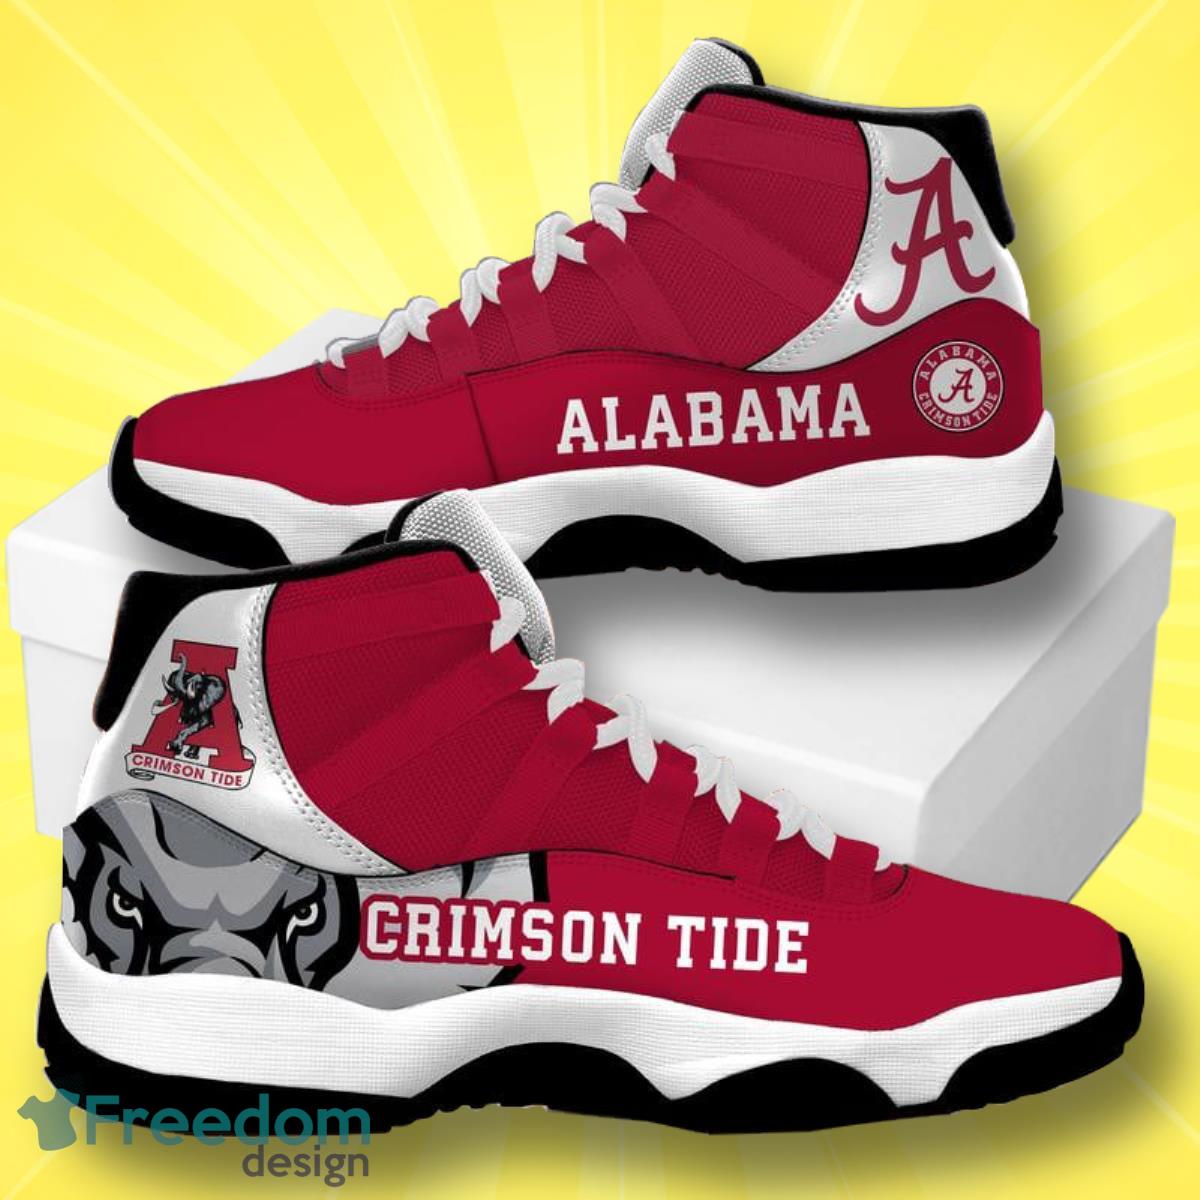 Alabama Crimson Tide Football Team Air Jordan 11 Best Sneakers For Men Women Fans Product Photo 1